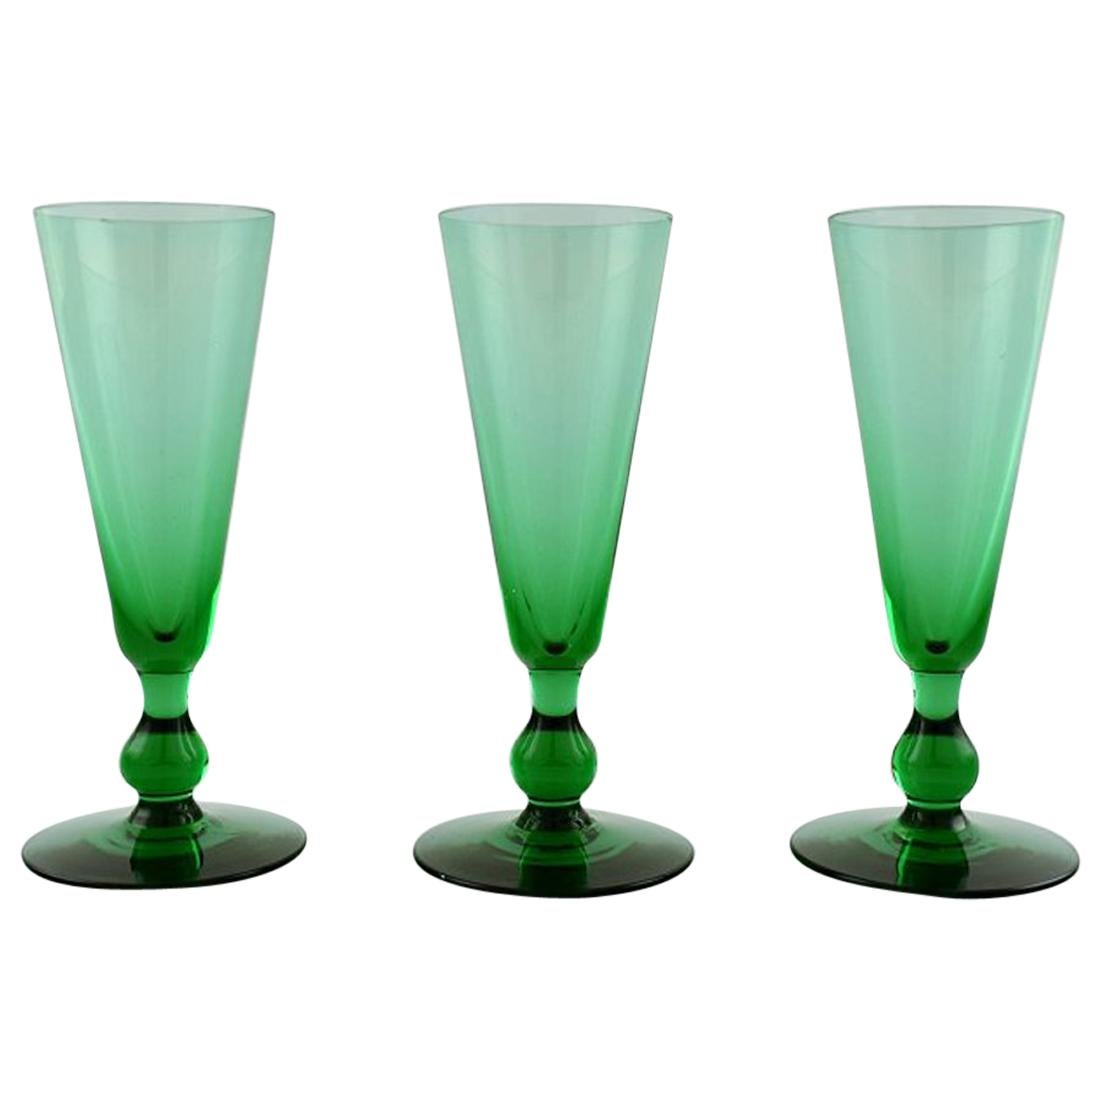 Simon Gate for Orrefors, a Set of Three Green Art Glass